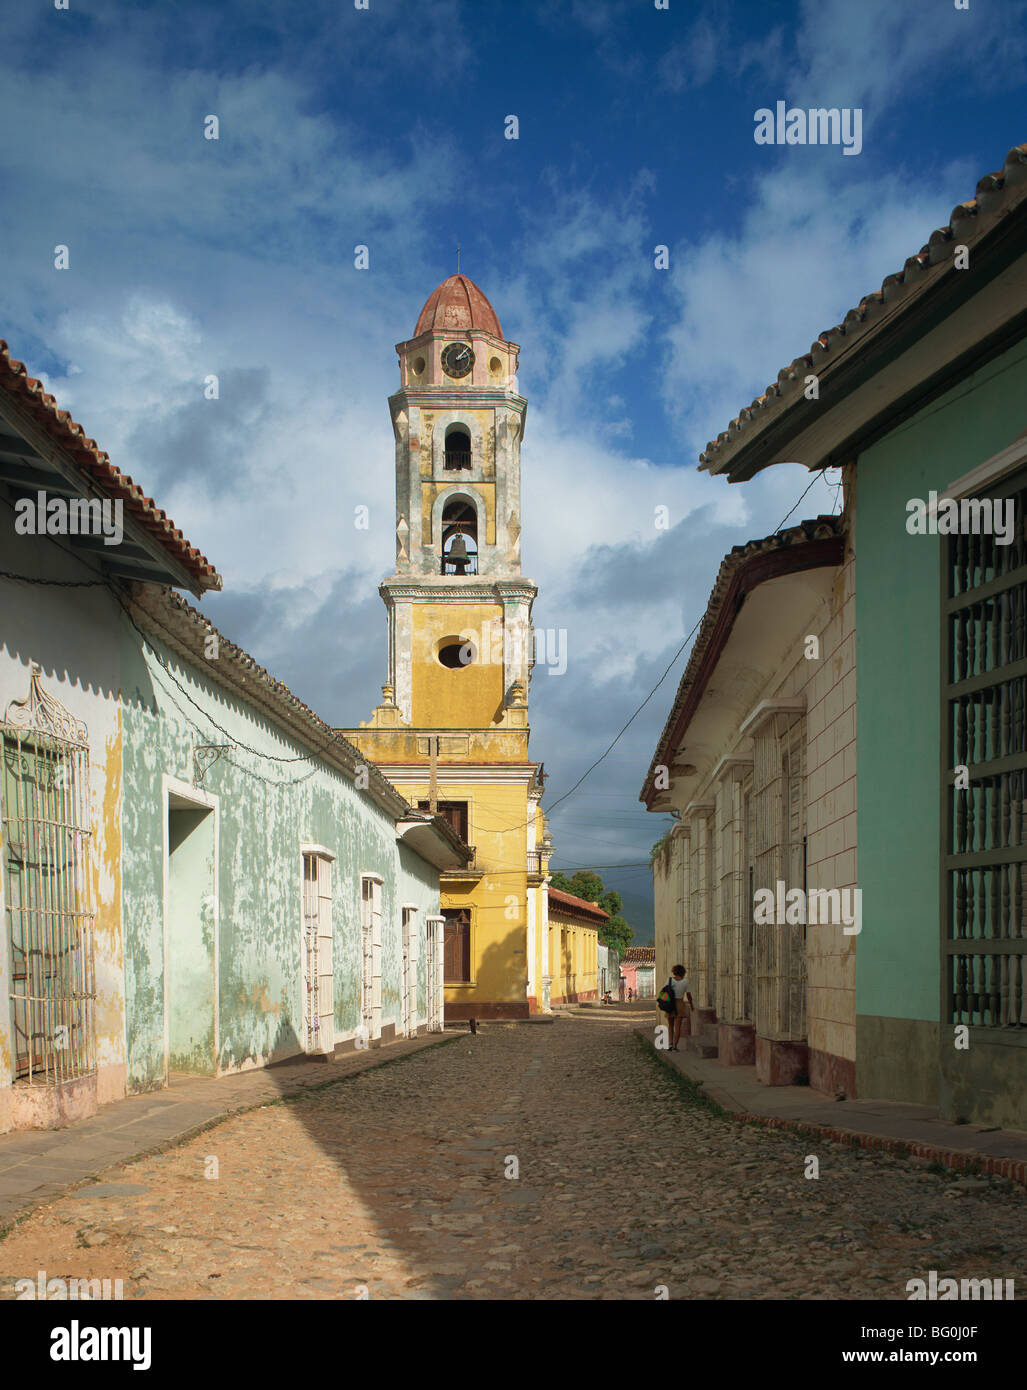 Turm des Hl. Franziskus von Assisi Kloster und Kirche, Trinidad, UNESCO World Heritage Site, Kuba, Karibik, Mittelamerika Stockfoto